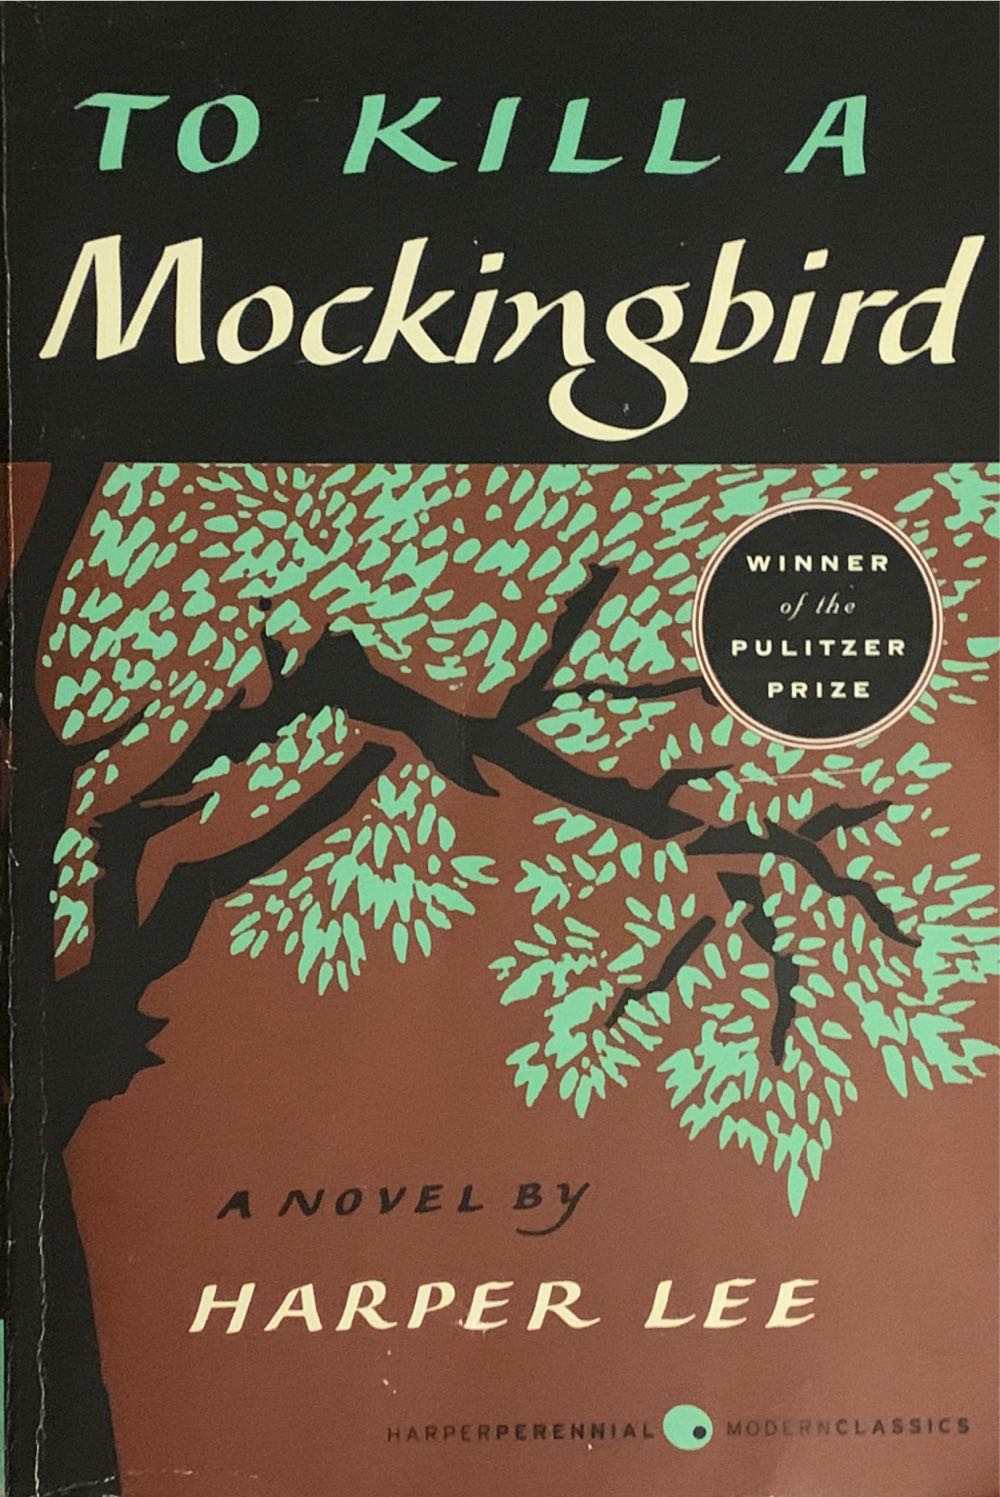 To Kill a Mockingbird - Harper Lee (Harper / Perrennial - Paperback) book collectible [Barcode 9780060935467] - Main Image 4